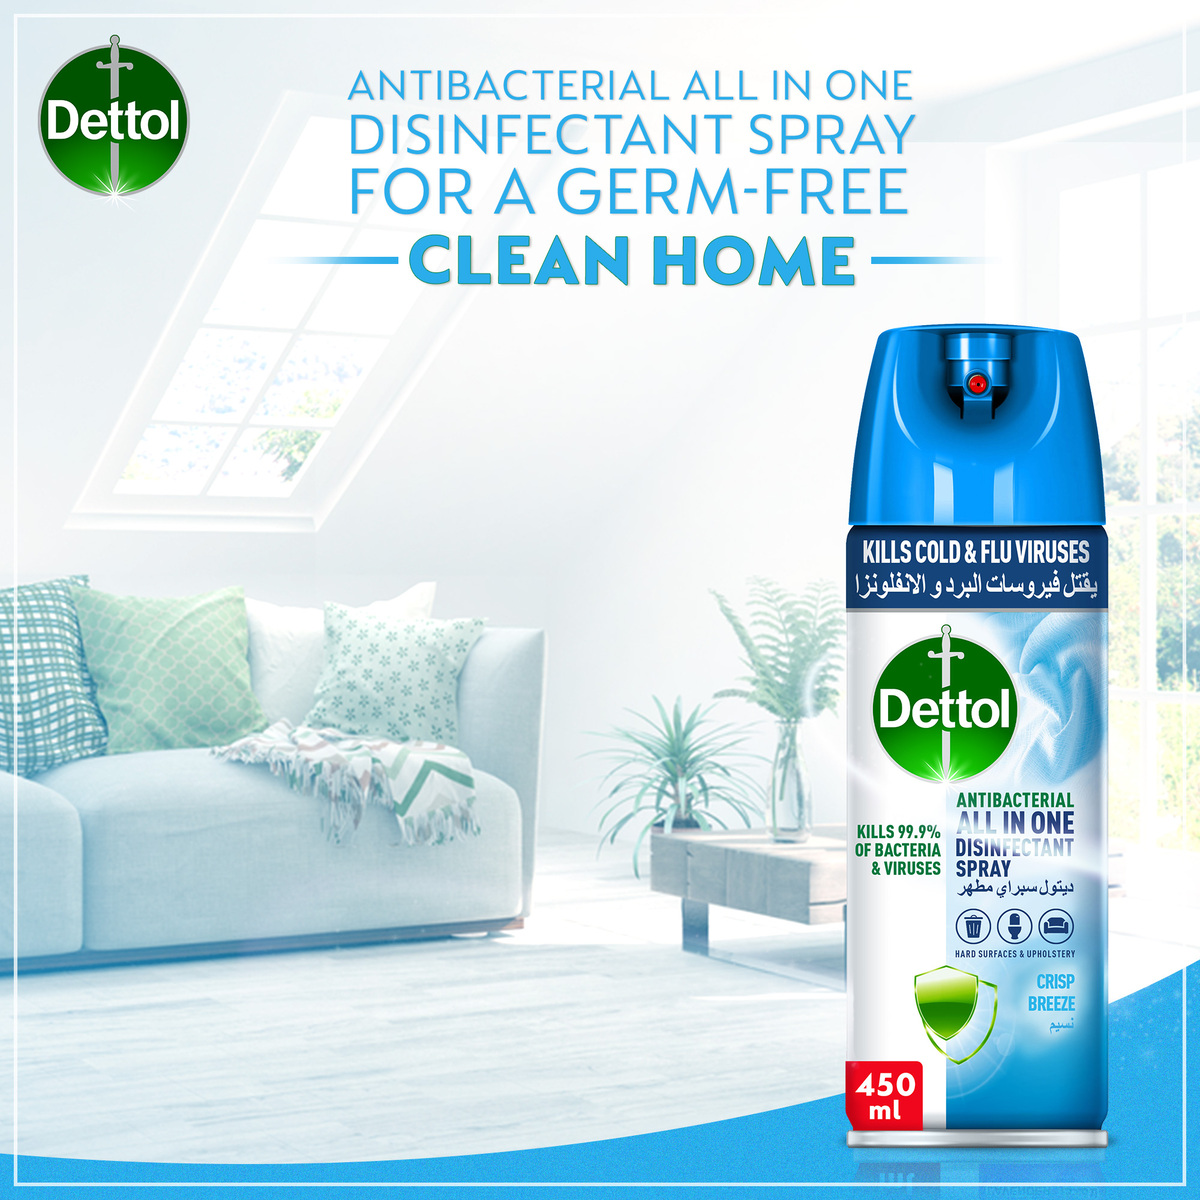 Dettol Crisp Breeze Antibacterial All in One Disinfectant Spray 450 ml